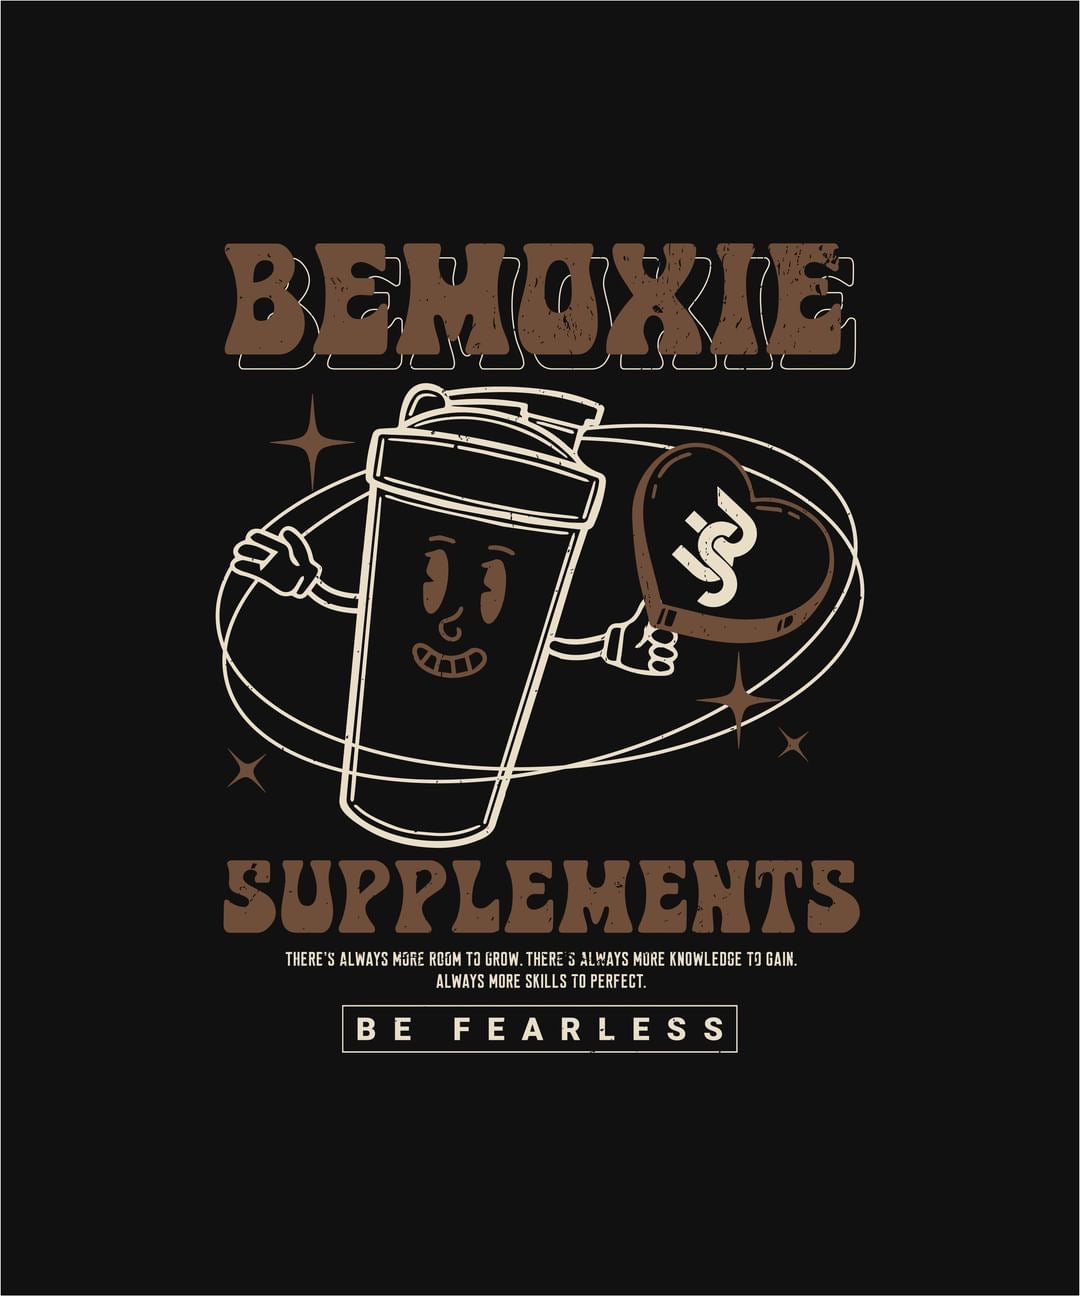 Bemoxie Supplements | Vintage Retro Shaker - Bemoxie Supplements